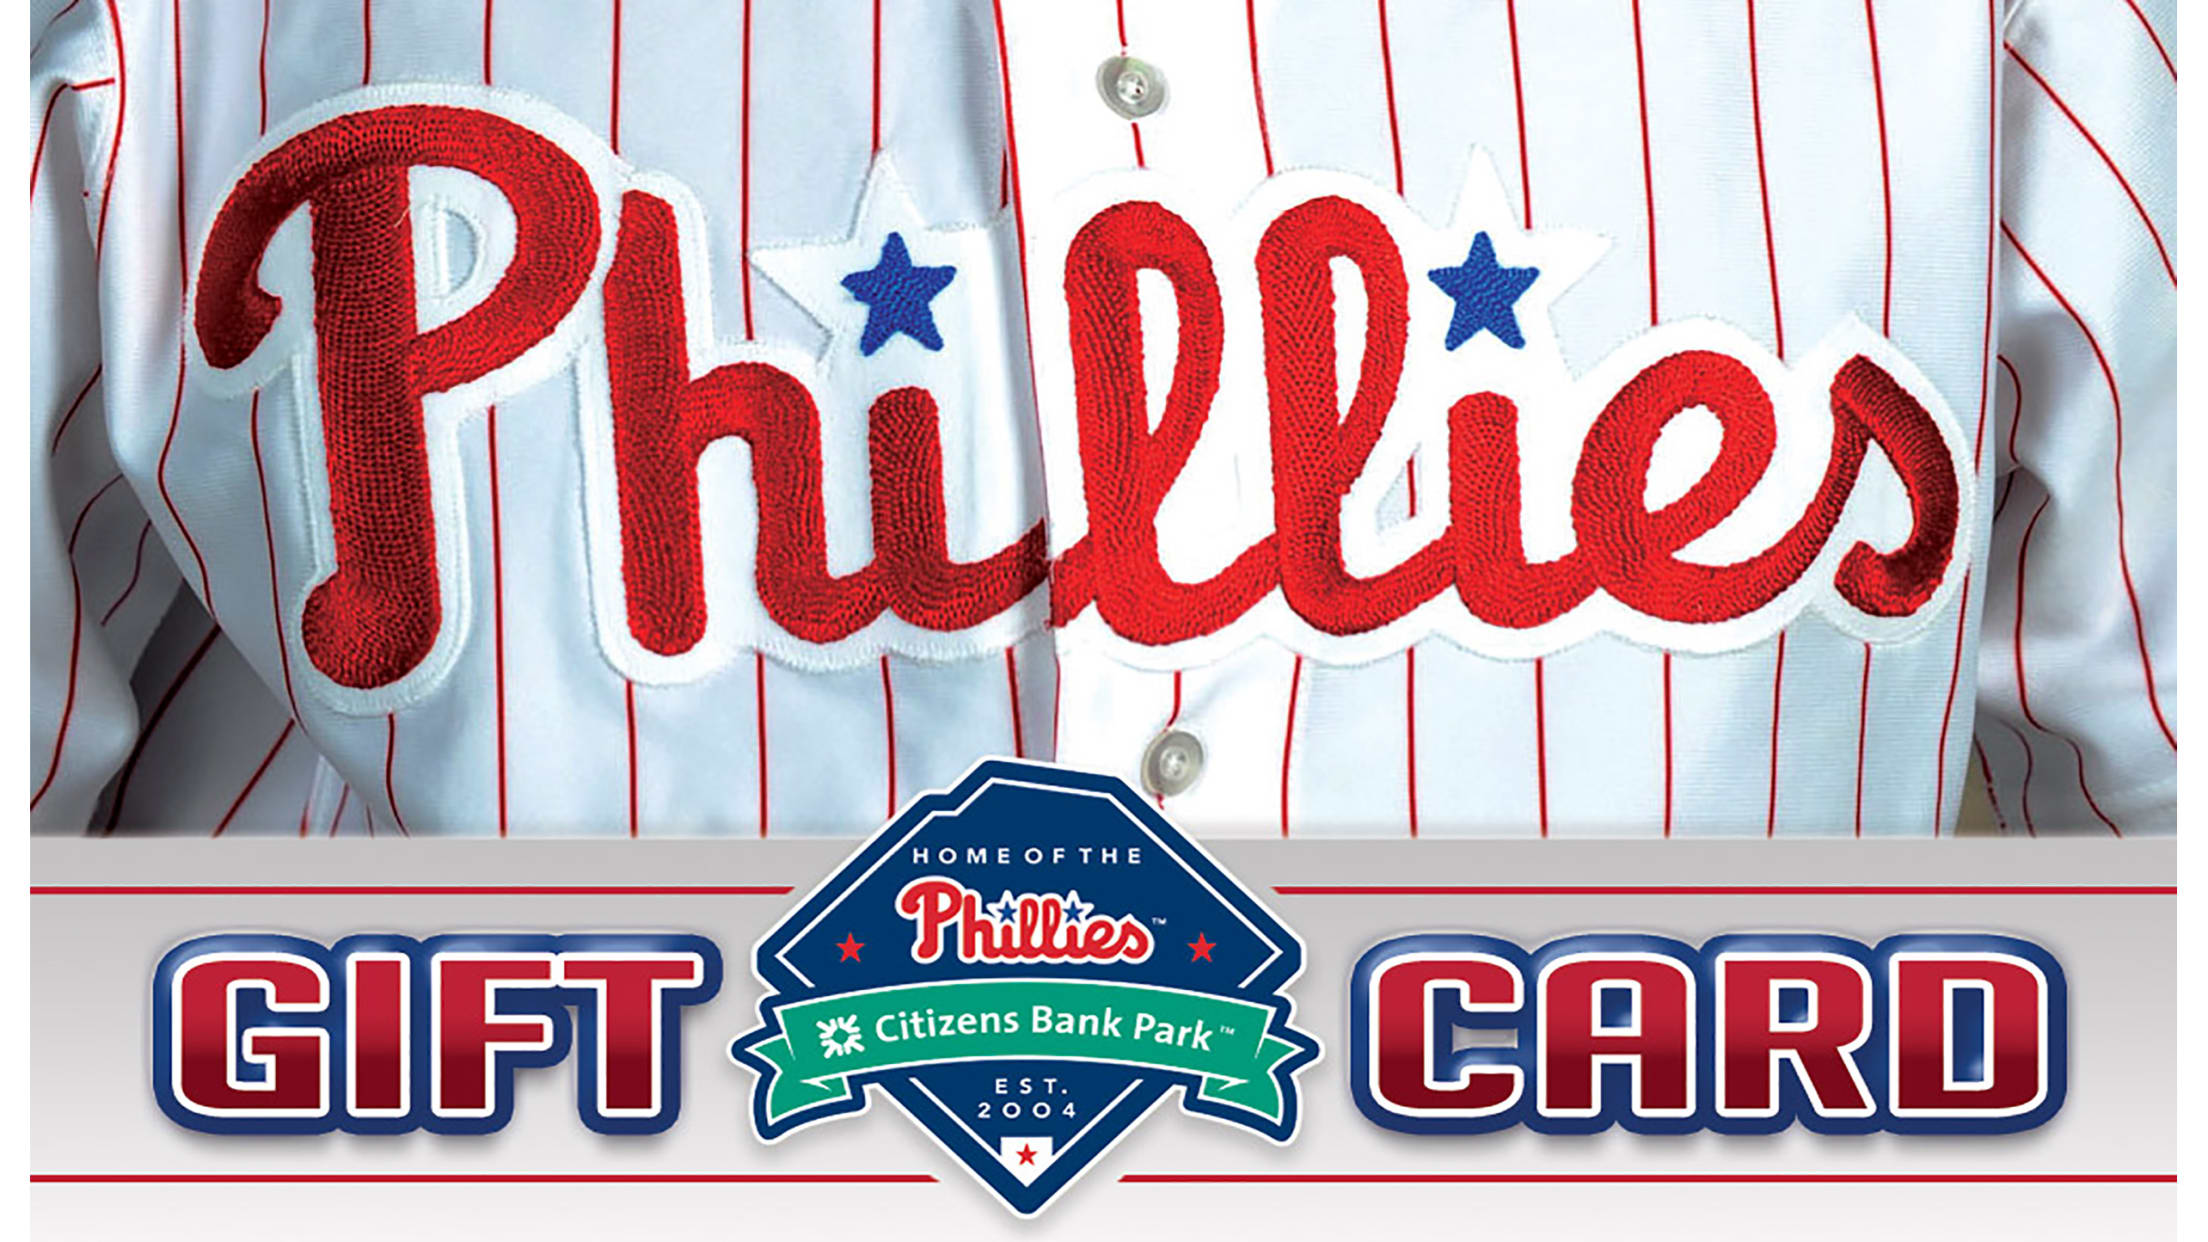 Phillies Gift Guide  Philadelphia Phillies